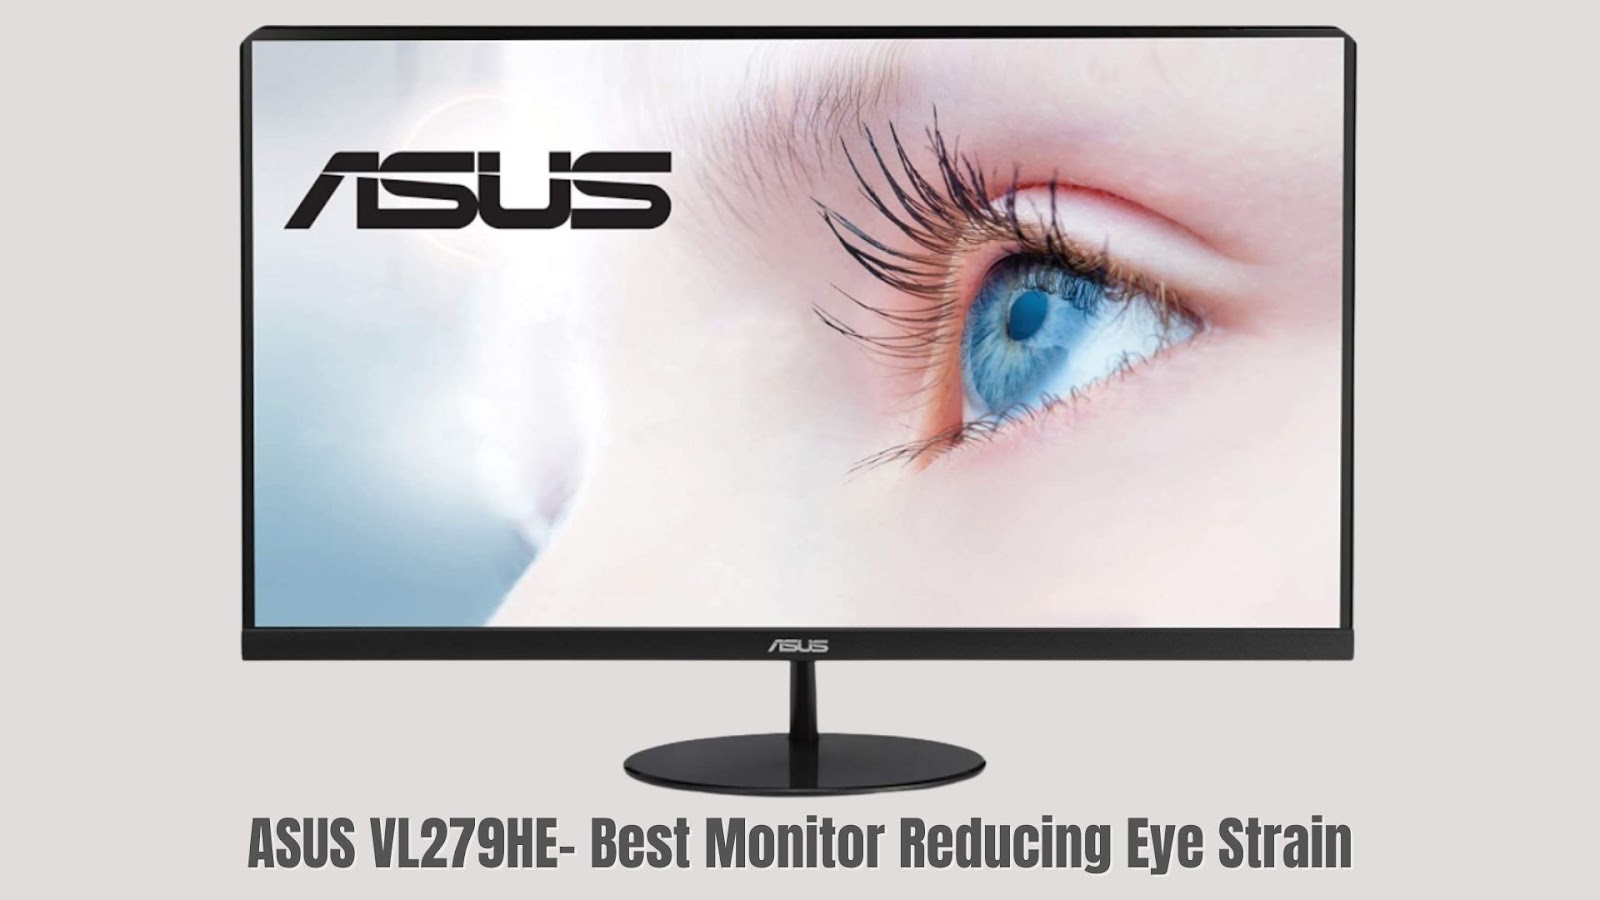 ASUS VL279HE– Best Monitor Reducing Eye Strain